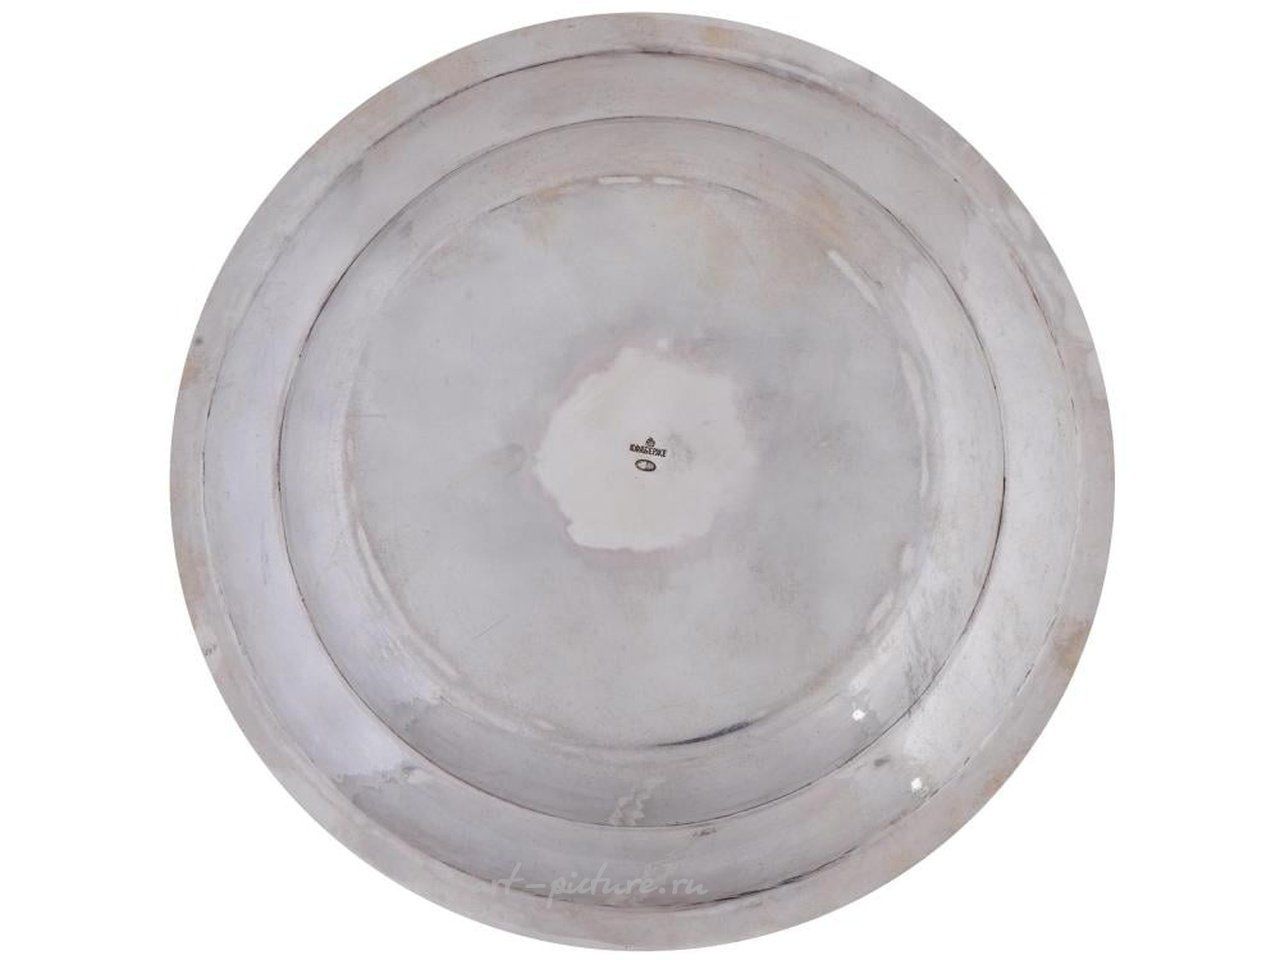 Русское серебро , Монументальная серебряная супница круглой формы